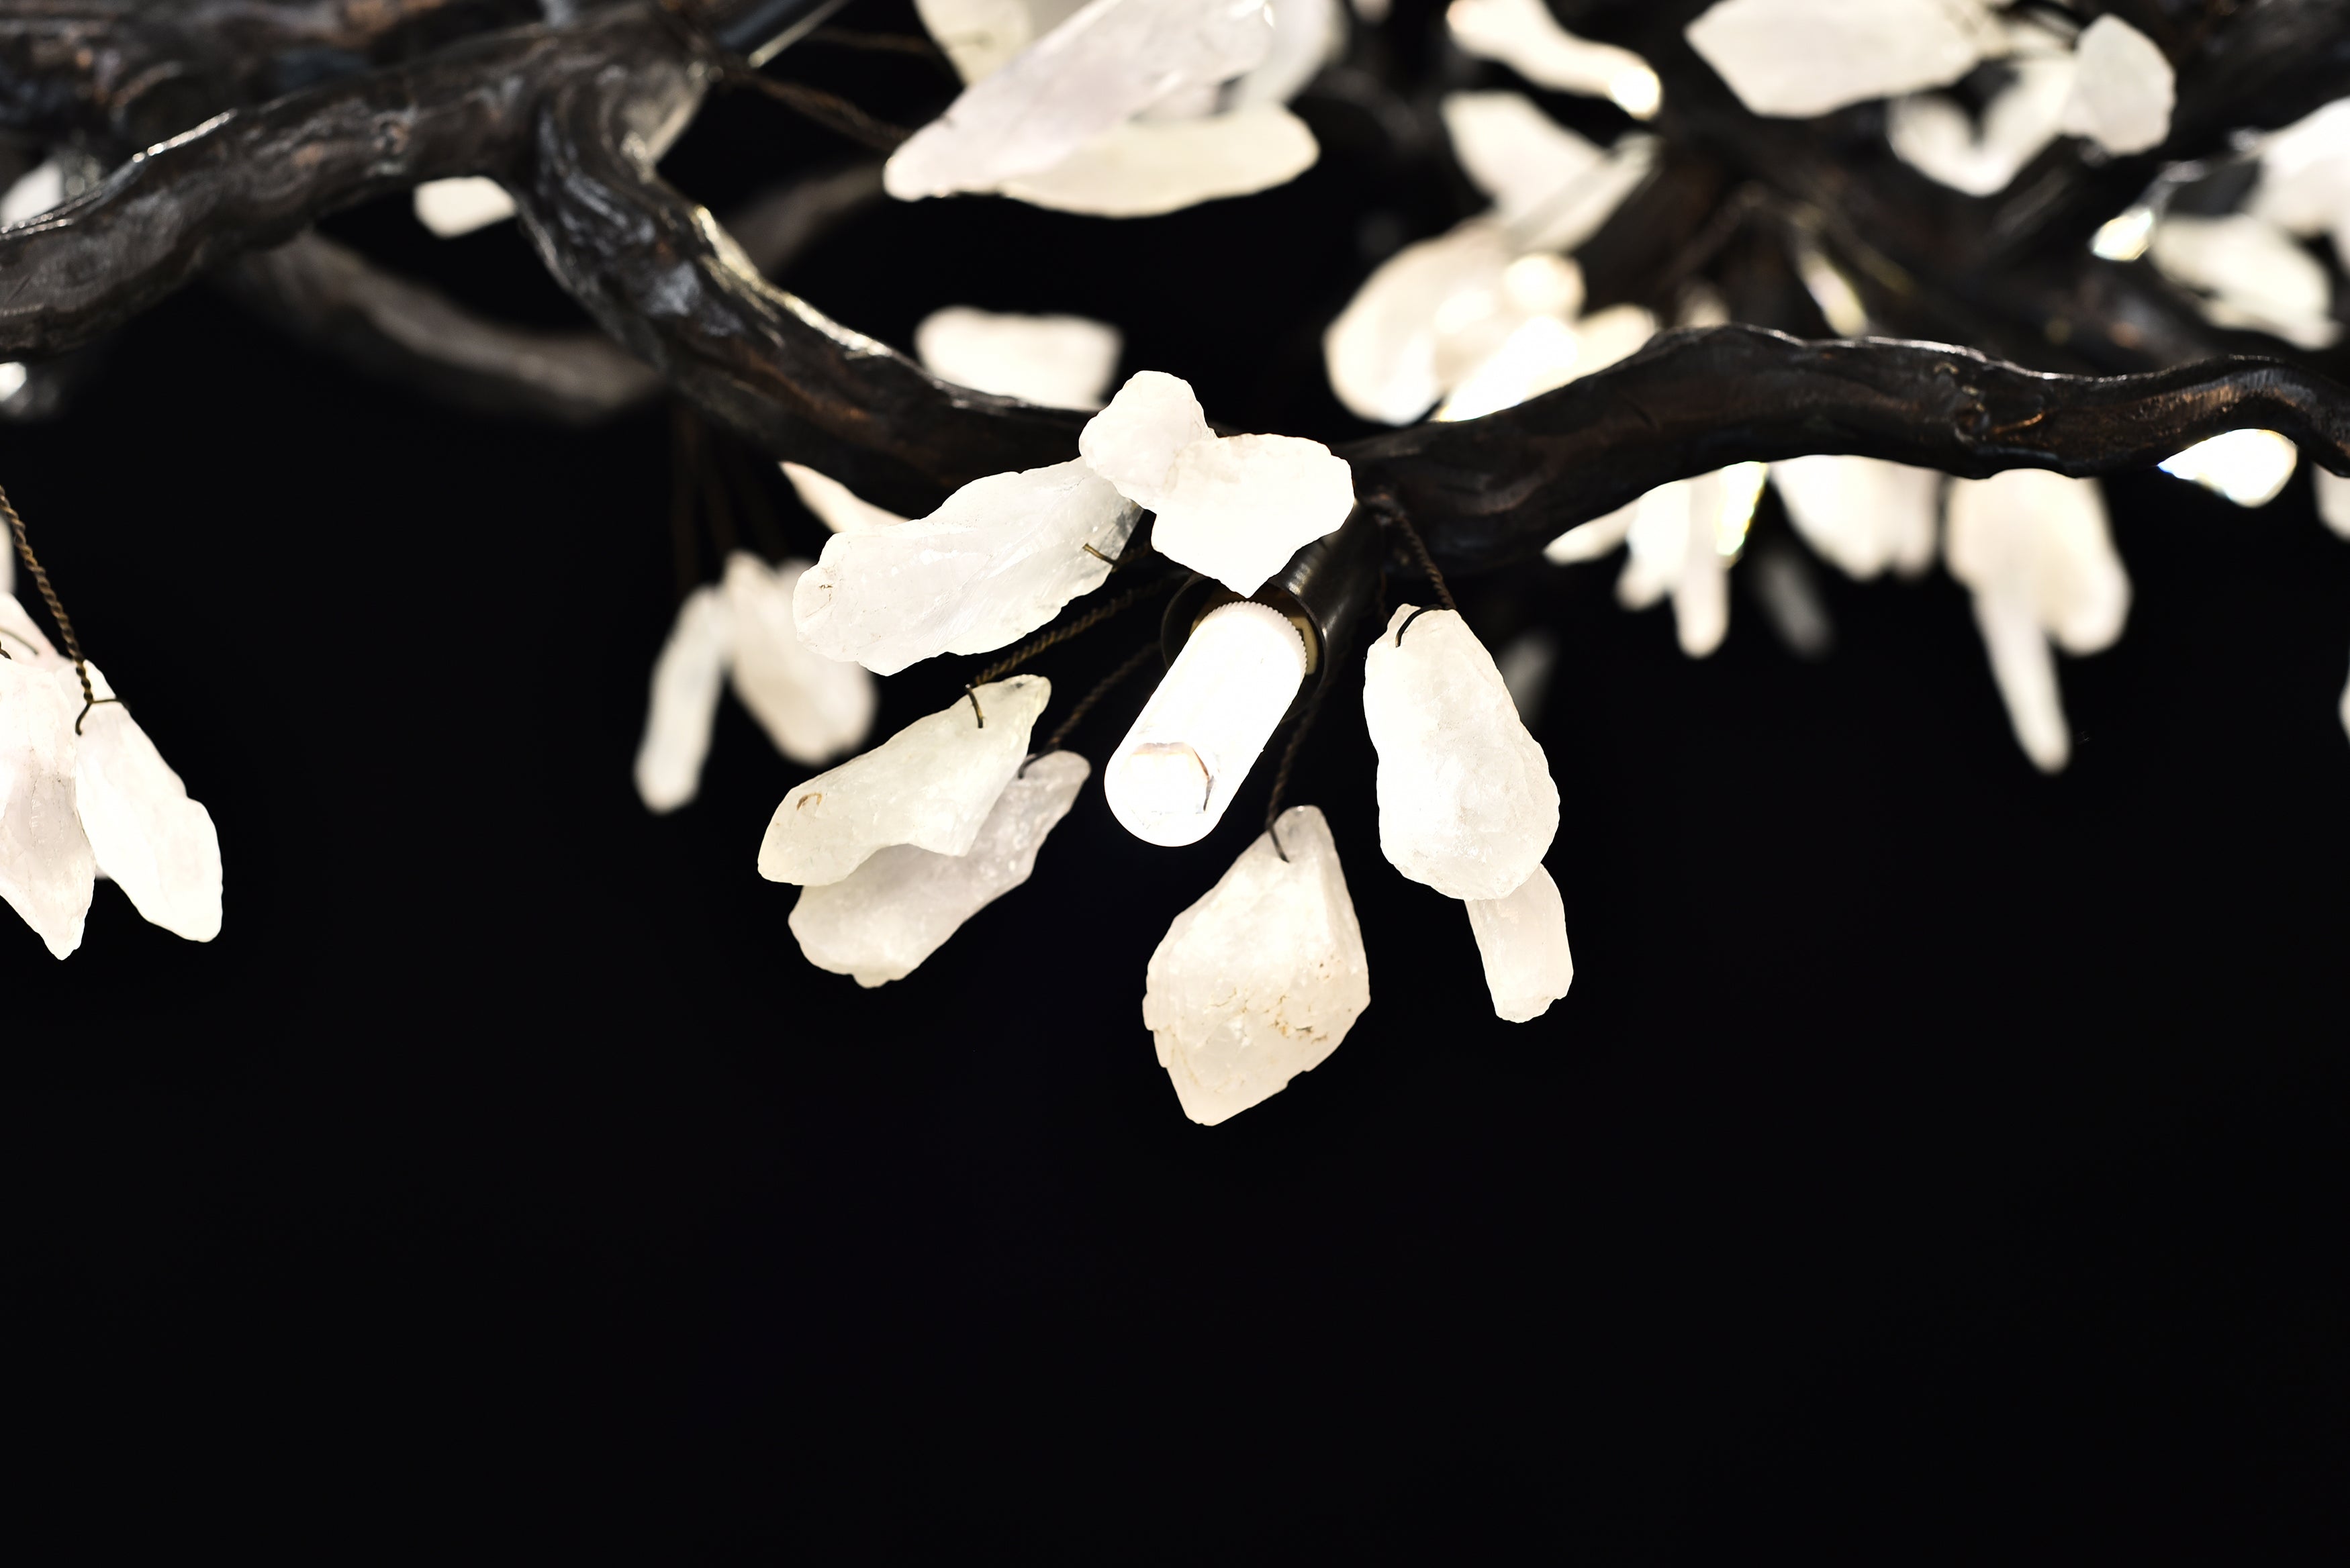 Japanese Blossom Branching Tree Chandelier - Italian Concept - 